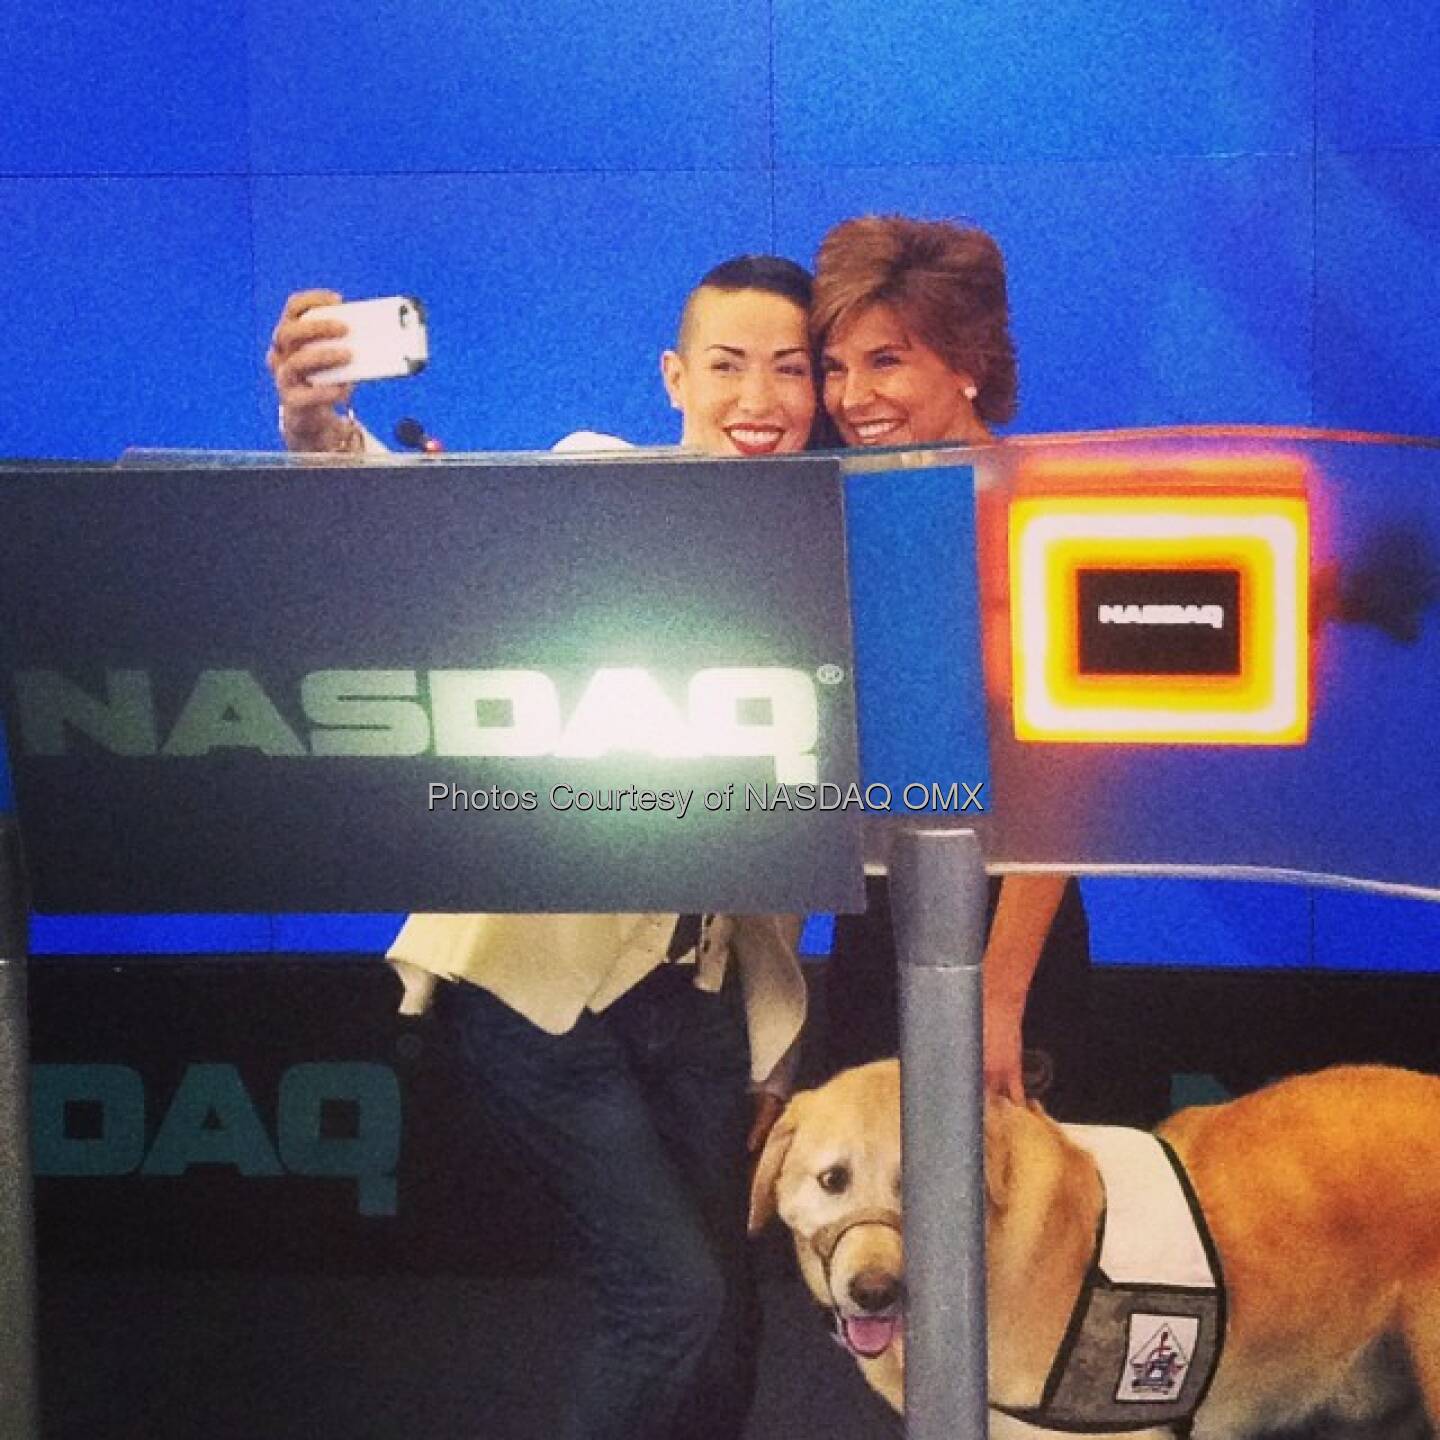 Quick #selfie at the #NASDAQ closing bell with designer Norisol Ferrari and retired Army Captain Leslie Nicole Smith #salute  Source: http://facebook.com/NASDAQ